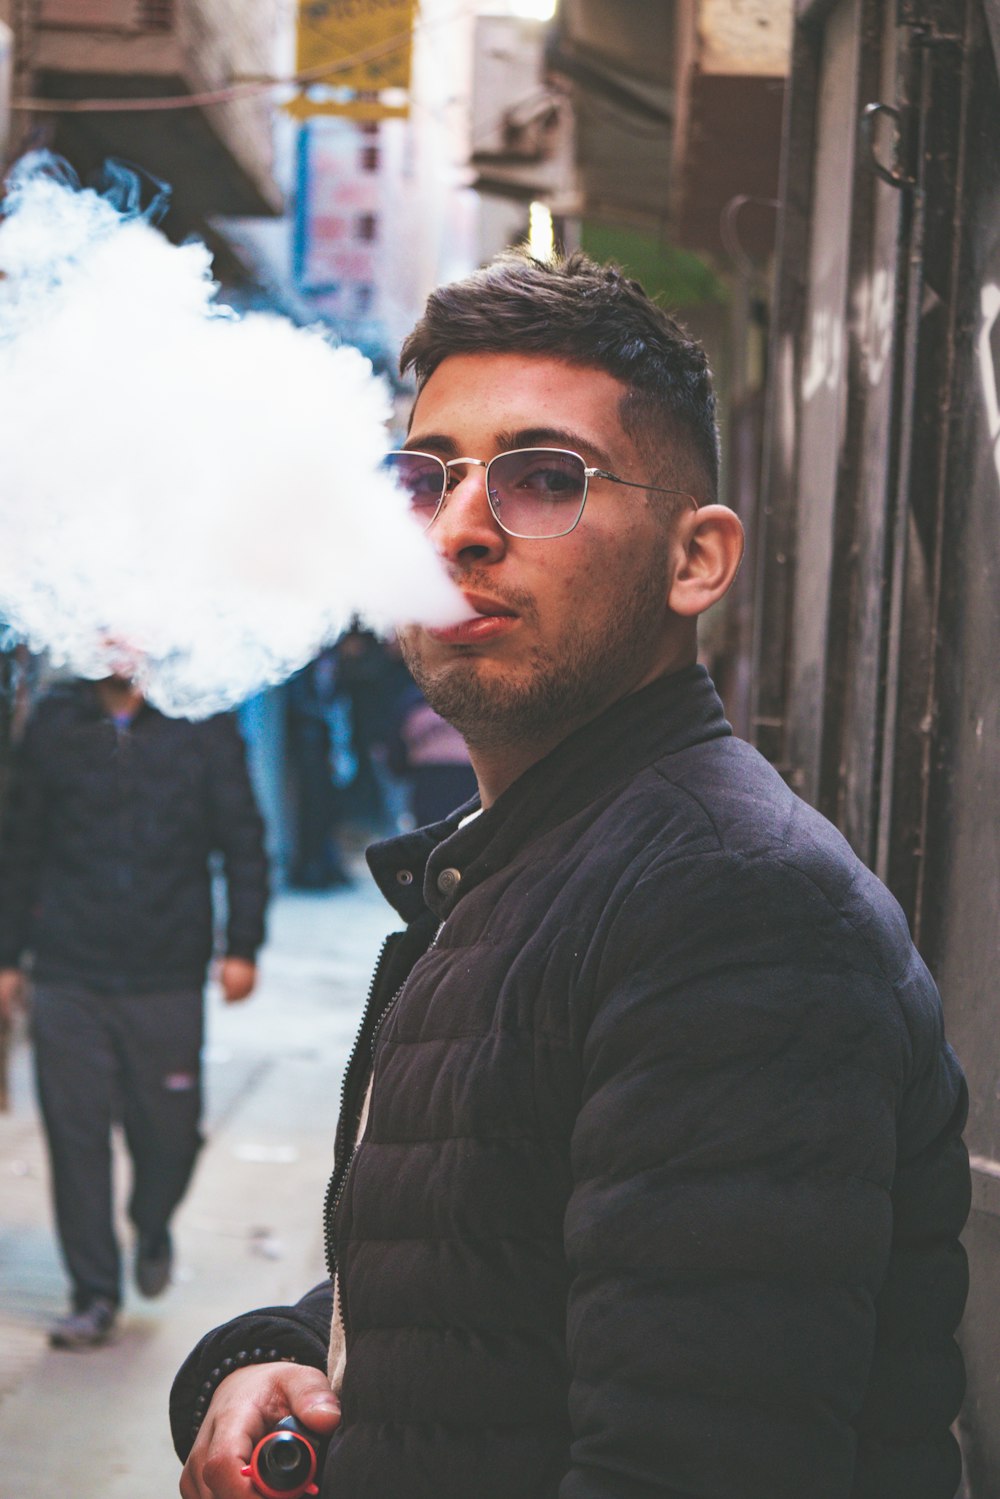 a man smoking a cigarette on a city street